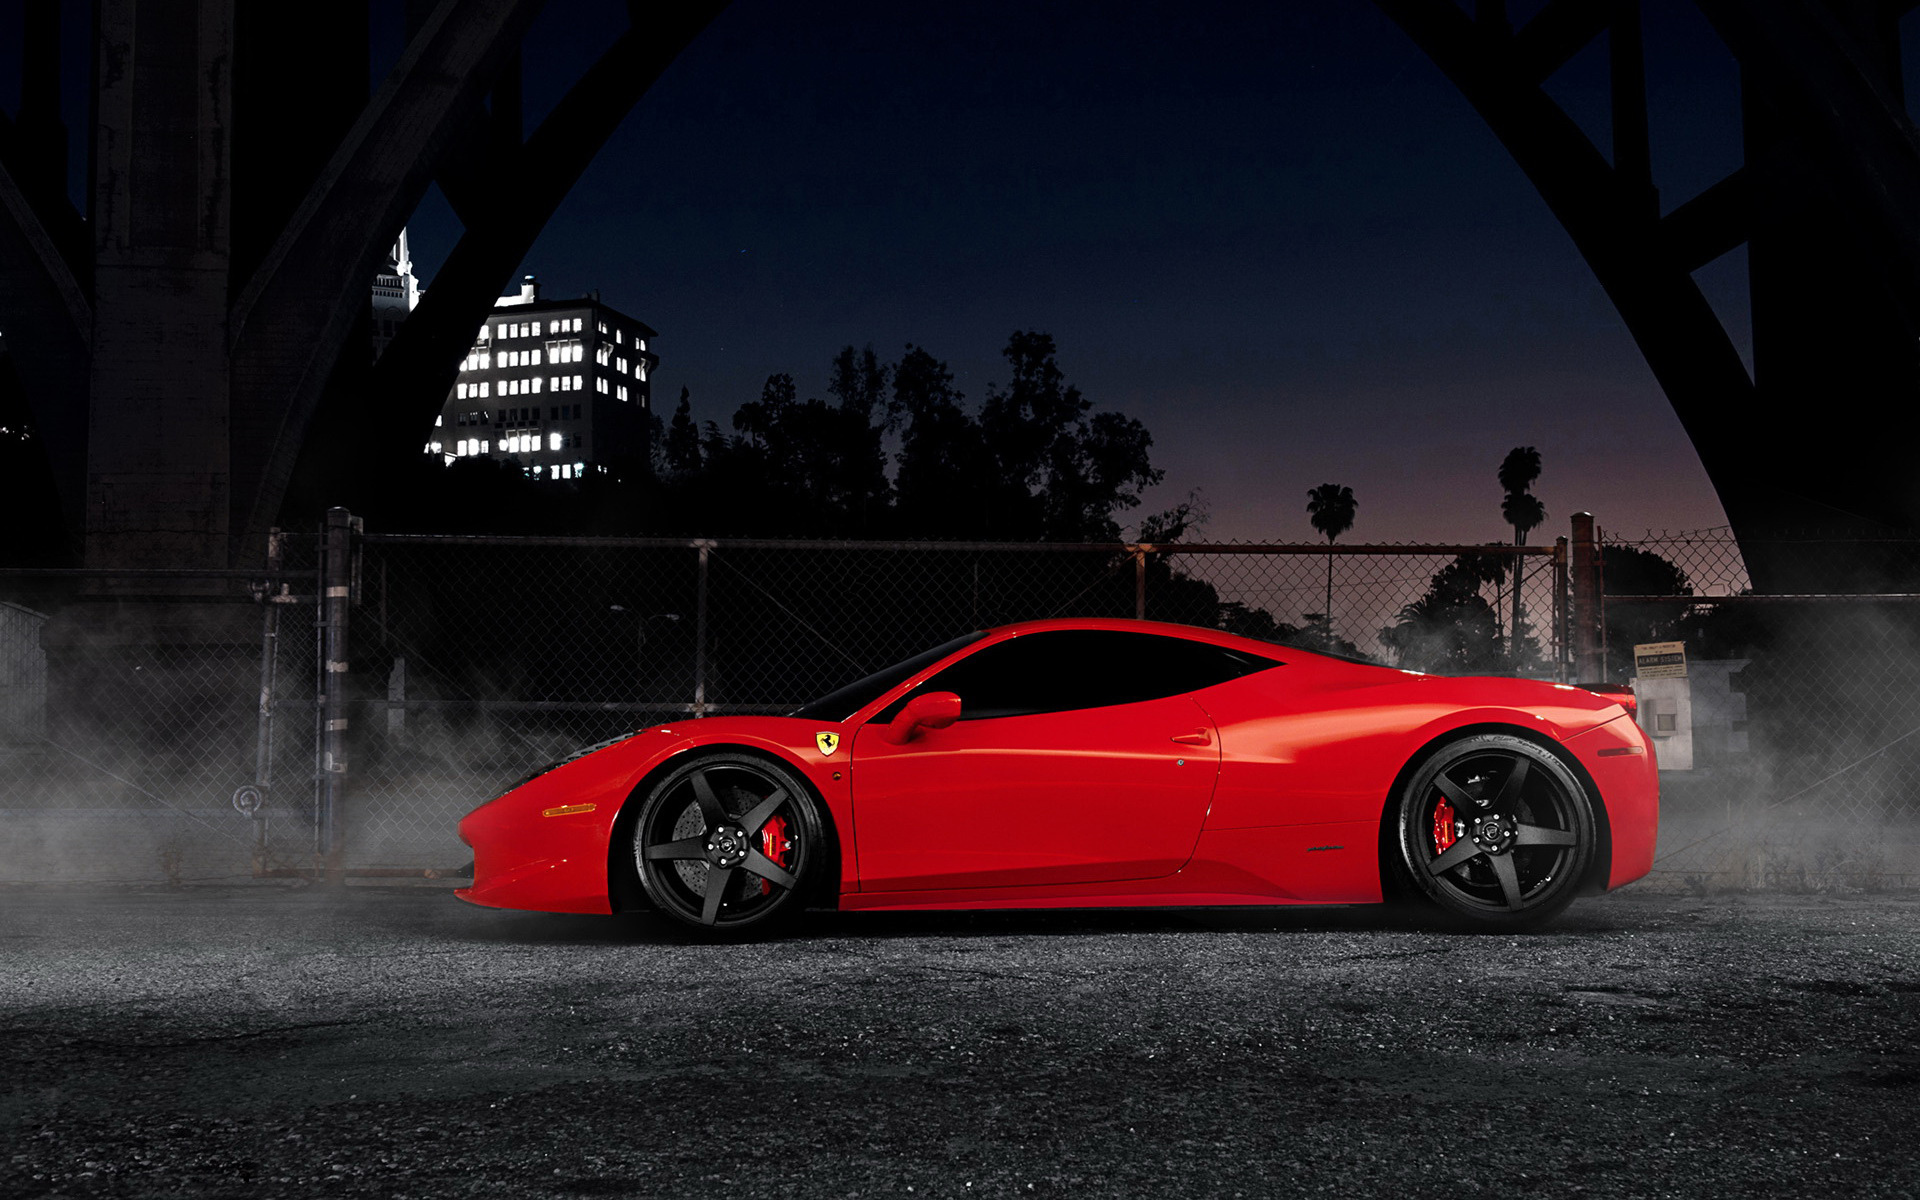 Ferrari - Car Wallpapers HD Free Download Backgrounds